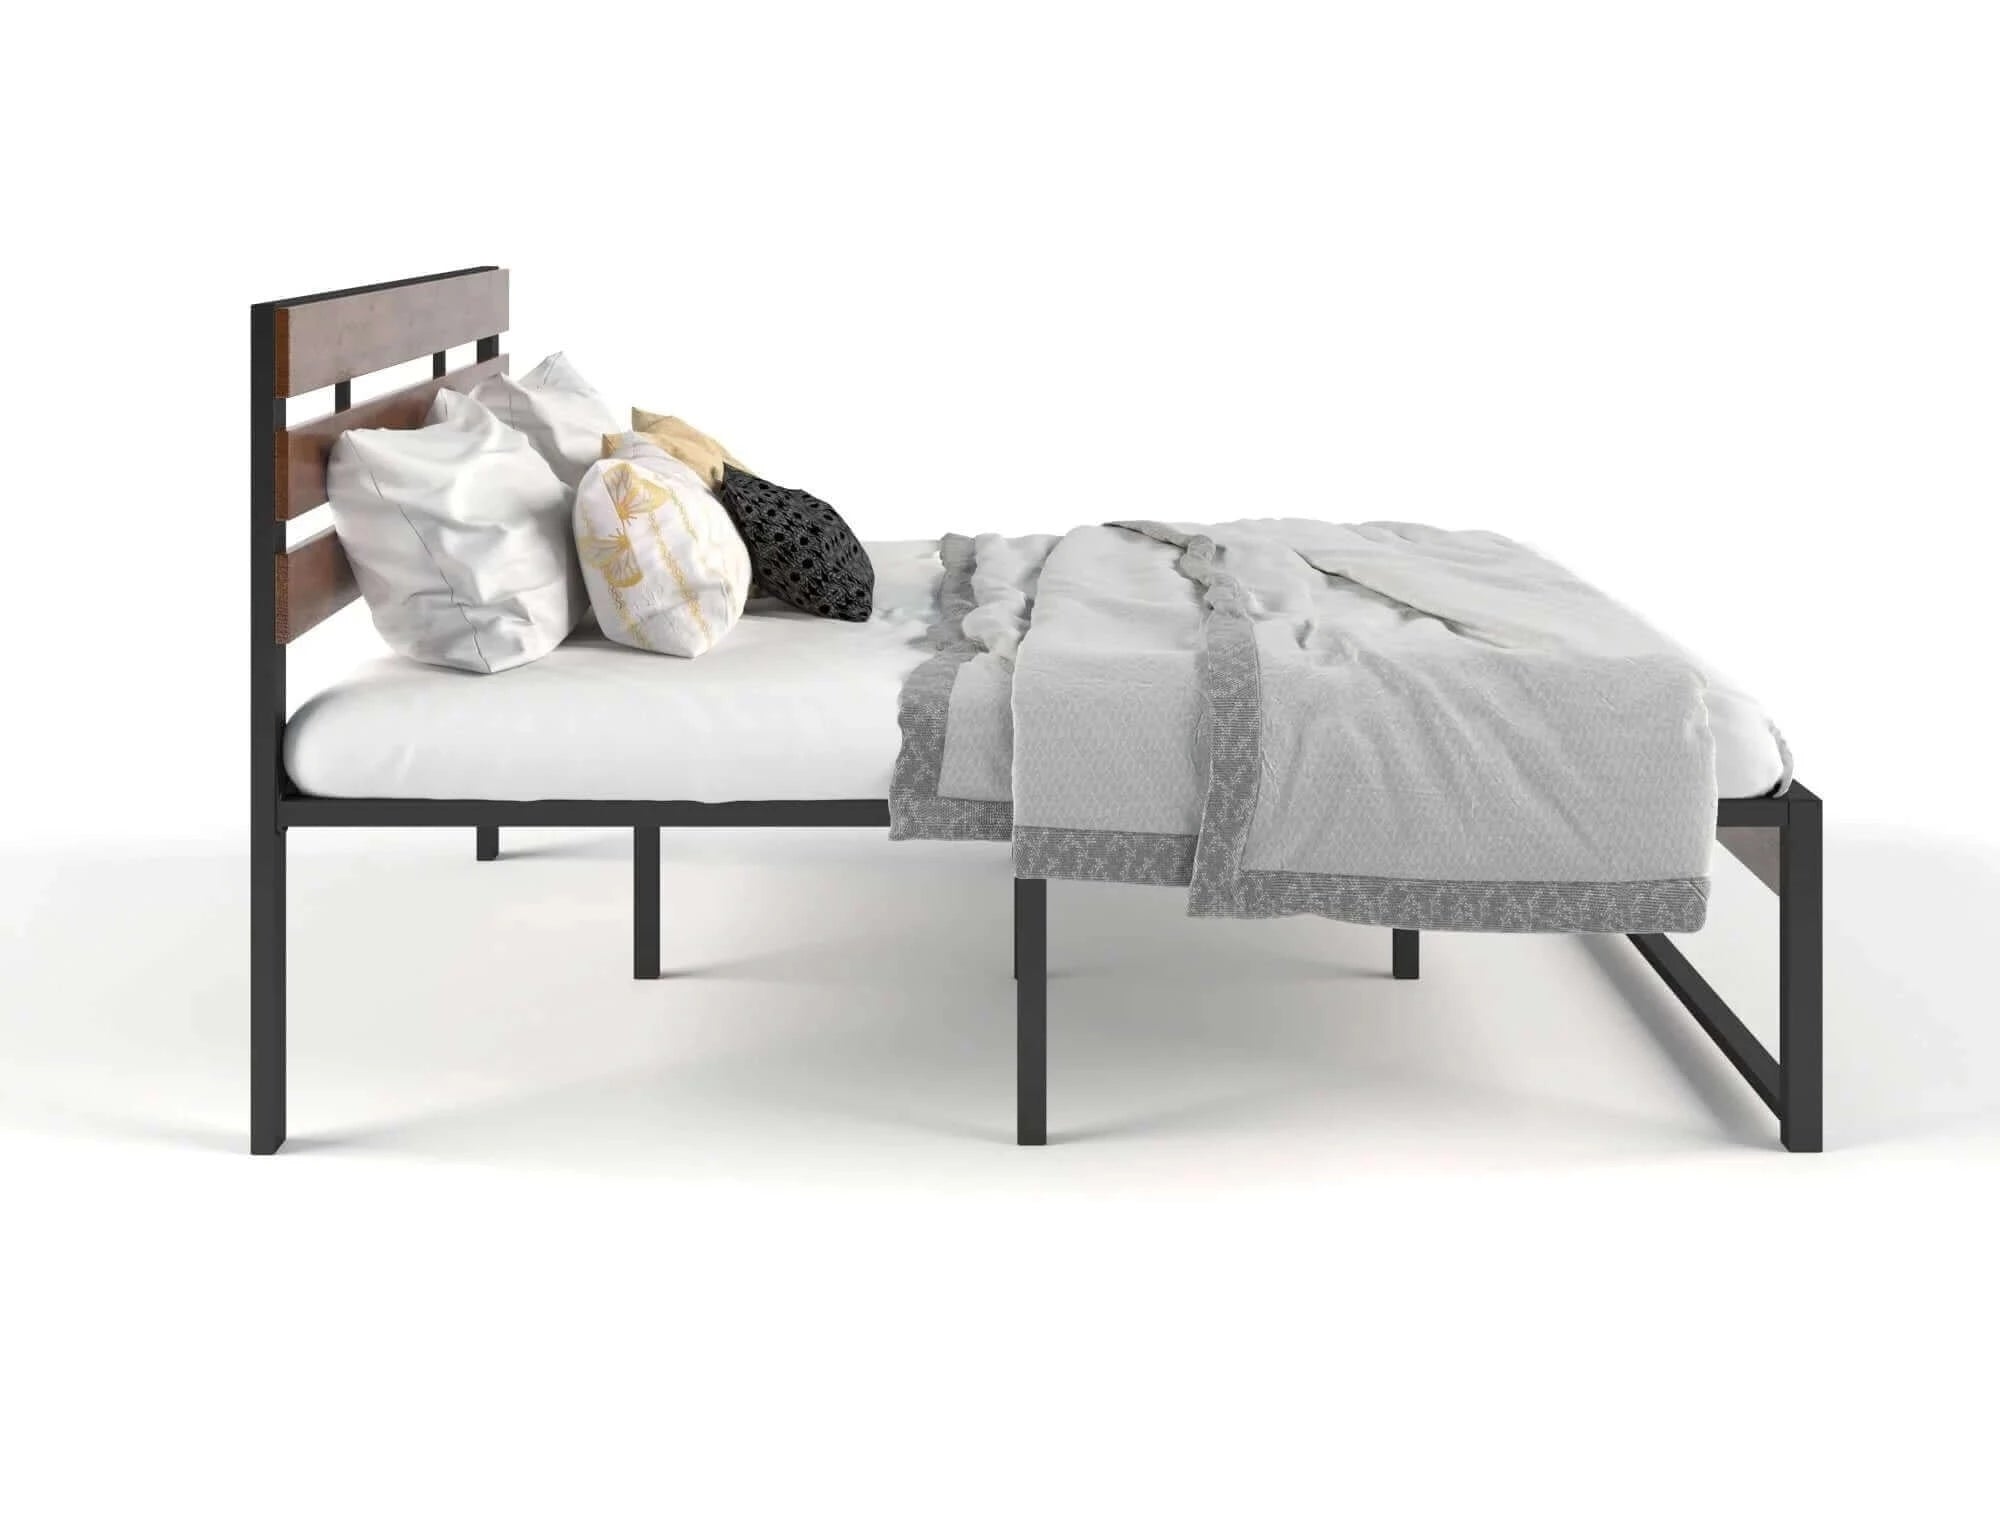 Buy ora wooden and metal bed frame king - upinteriors-Upinteriors